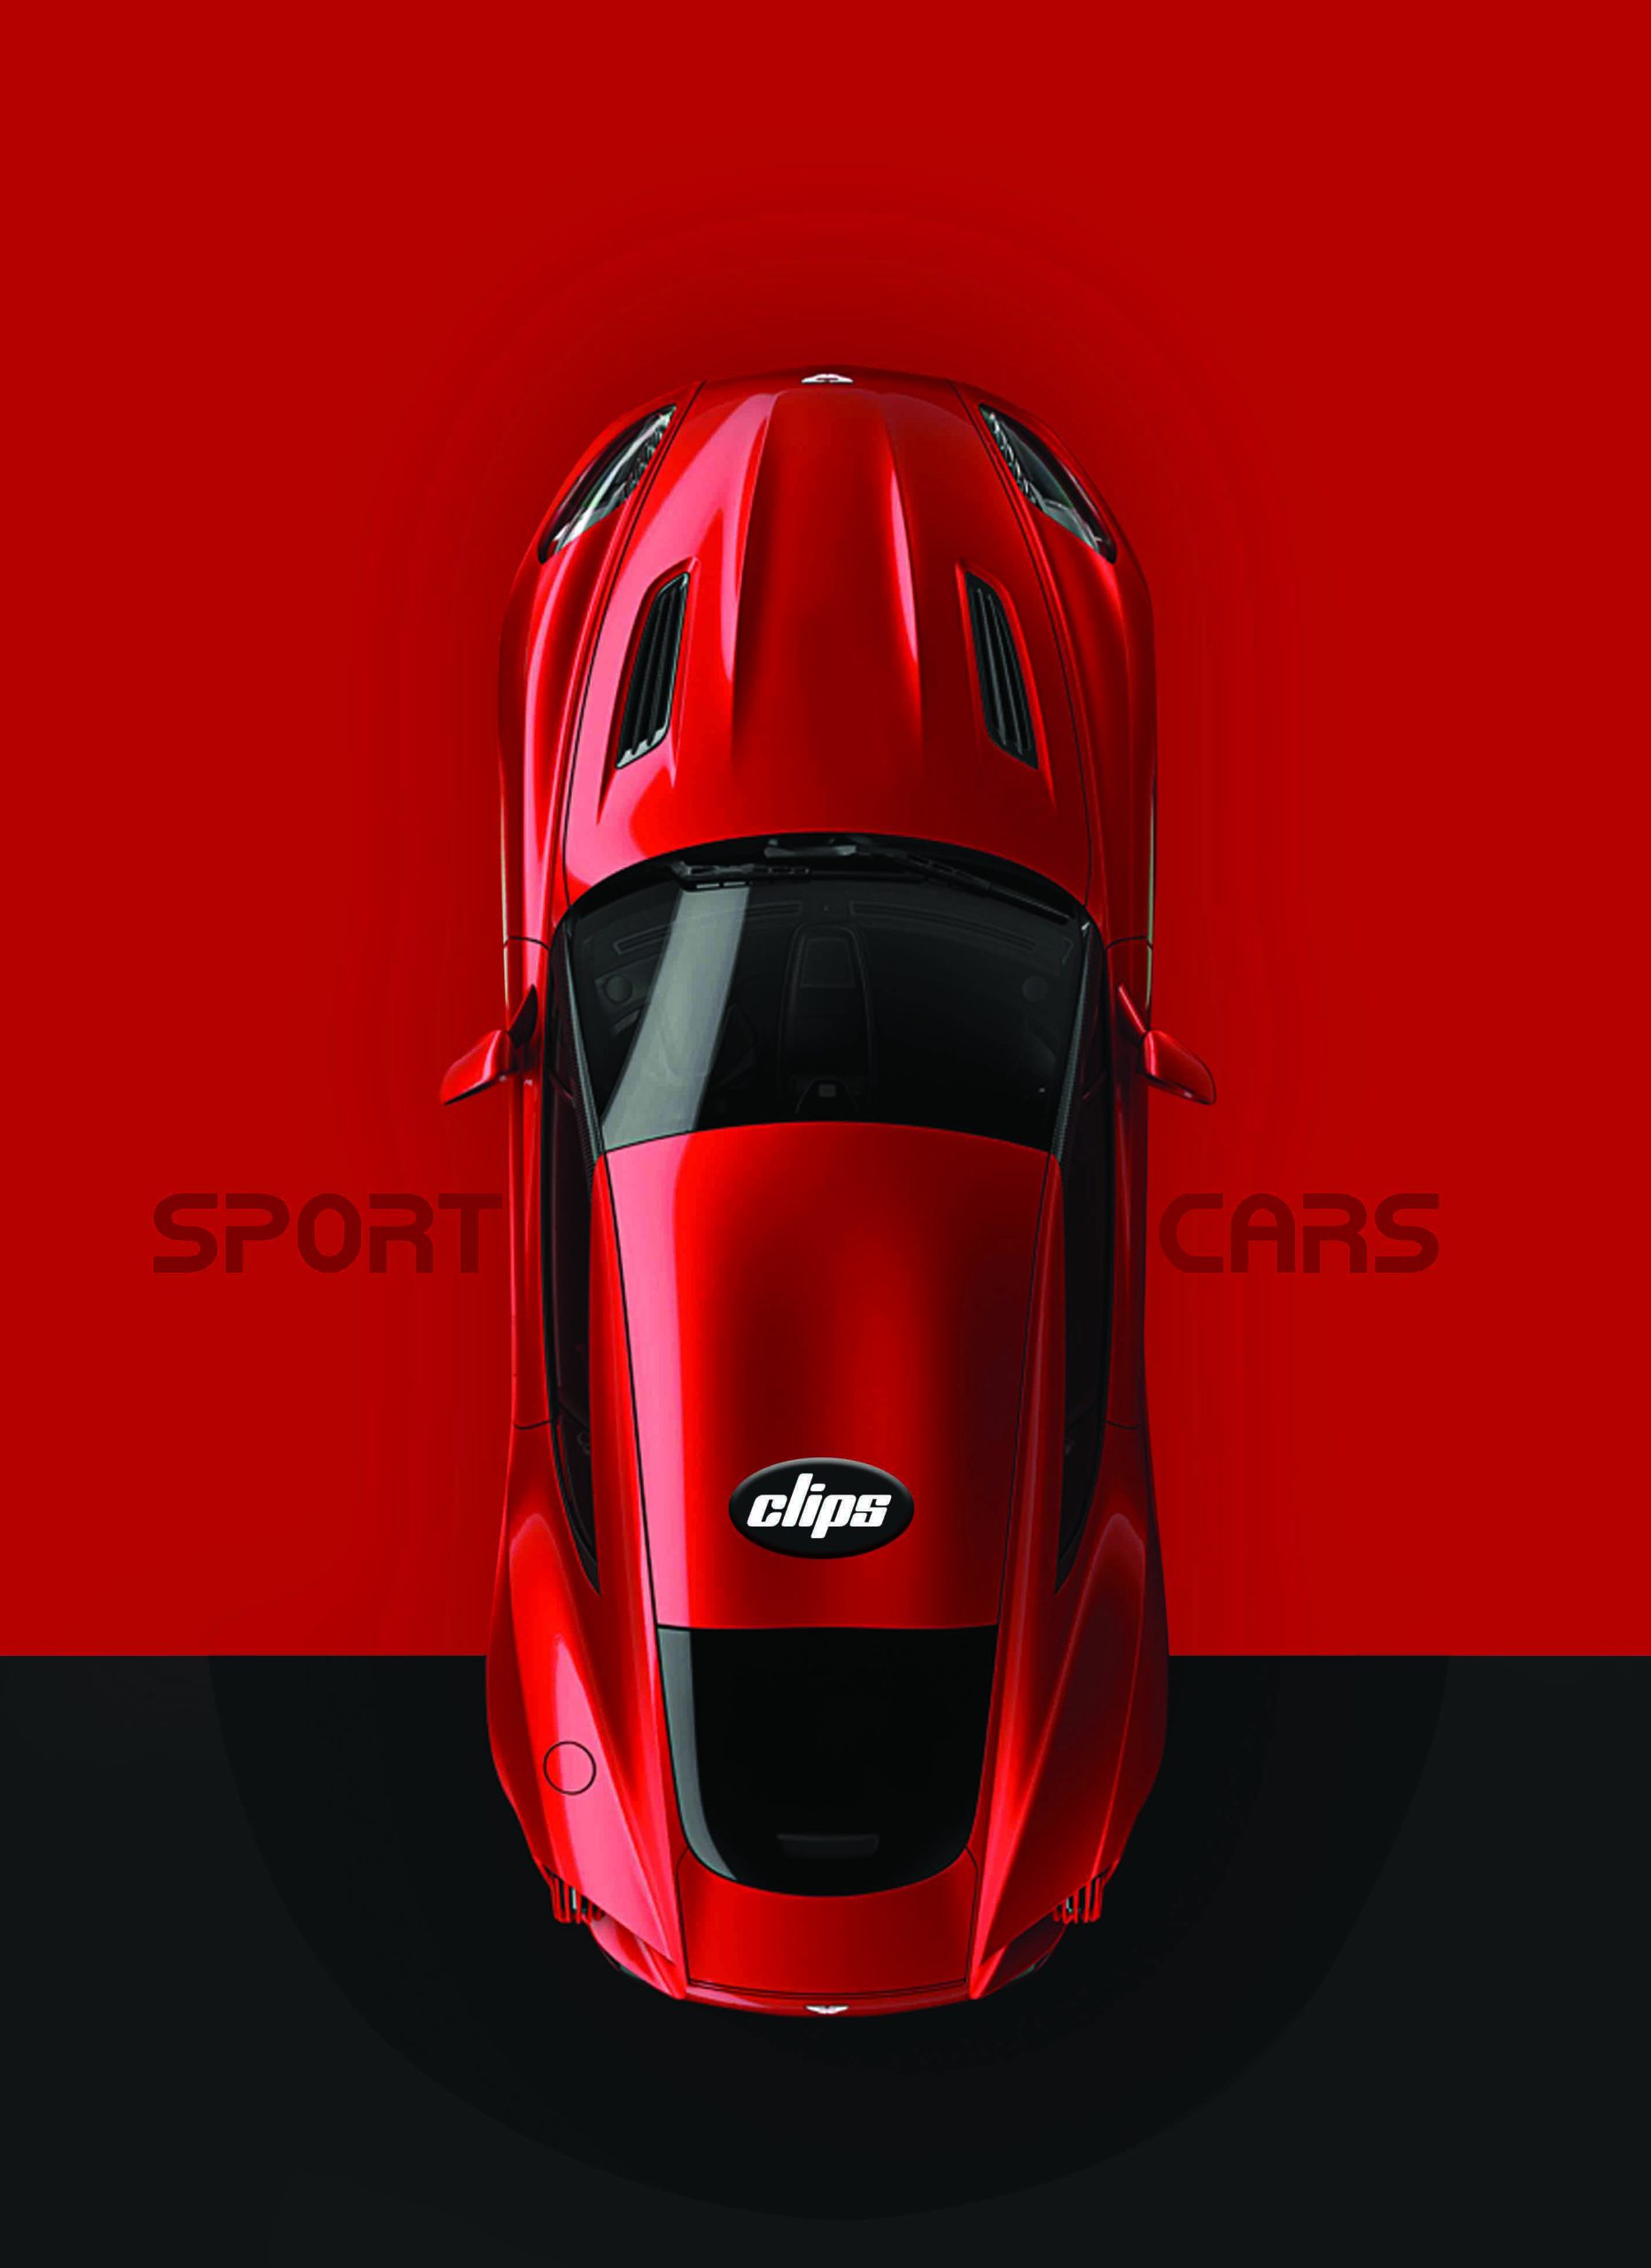 sport cars